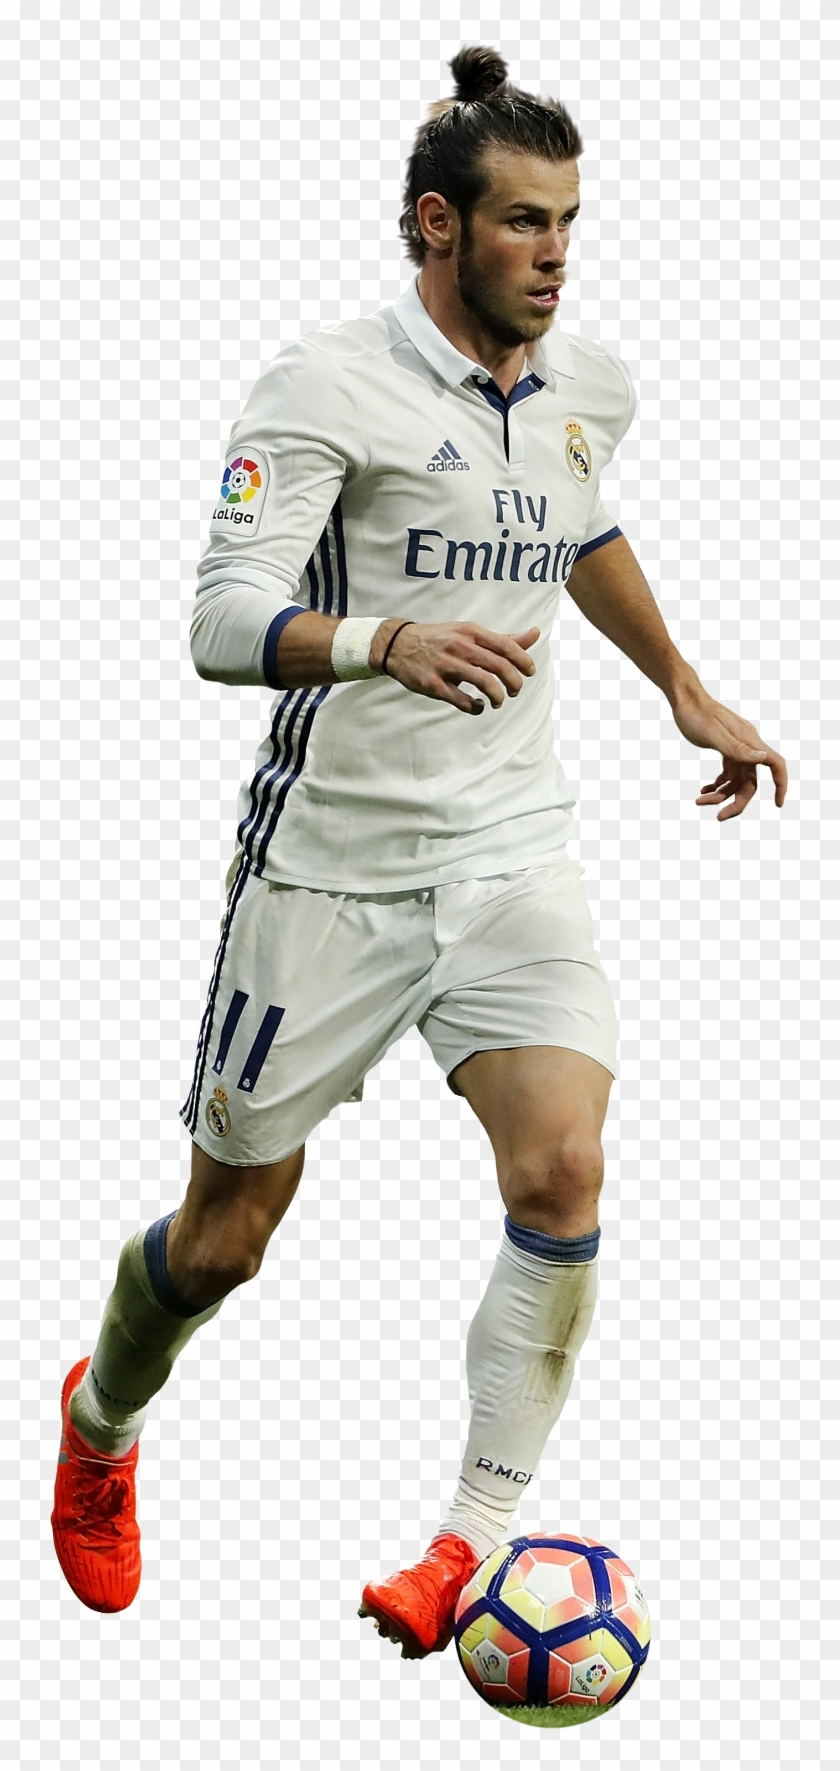 Gareth Bale Football Render - Gareth Bale Real Madrid Png Clipart #5498526